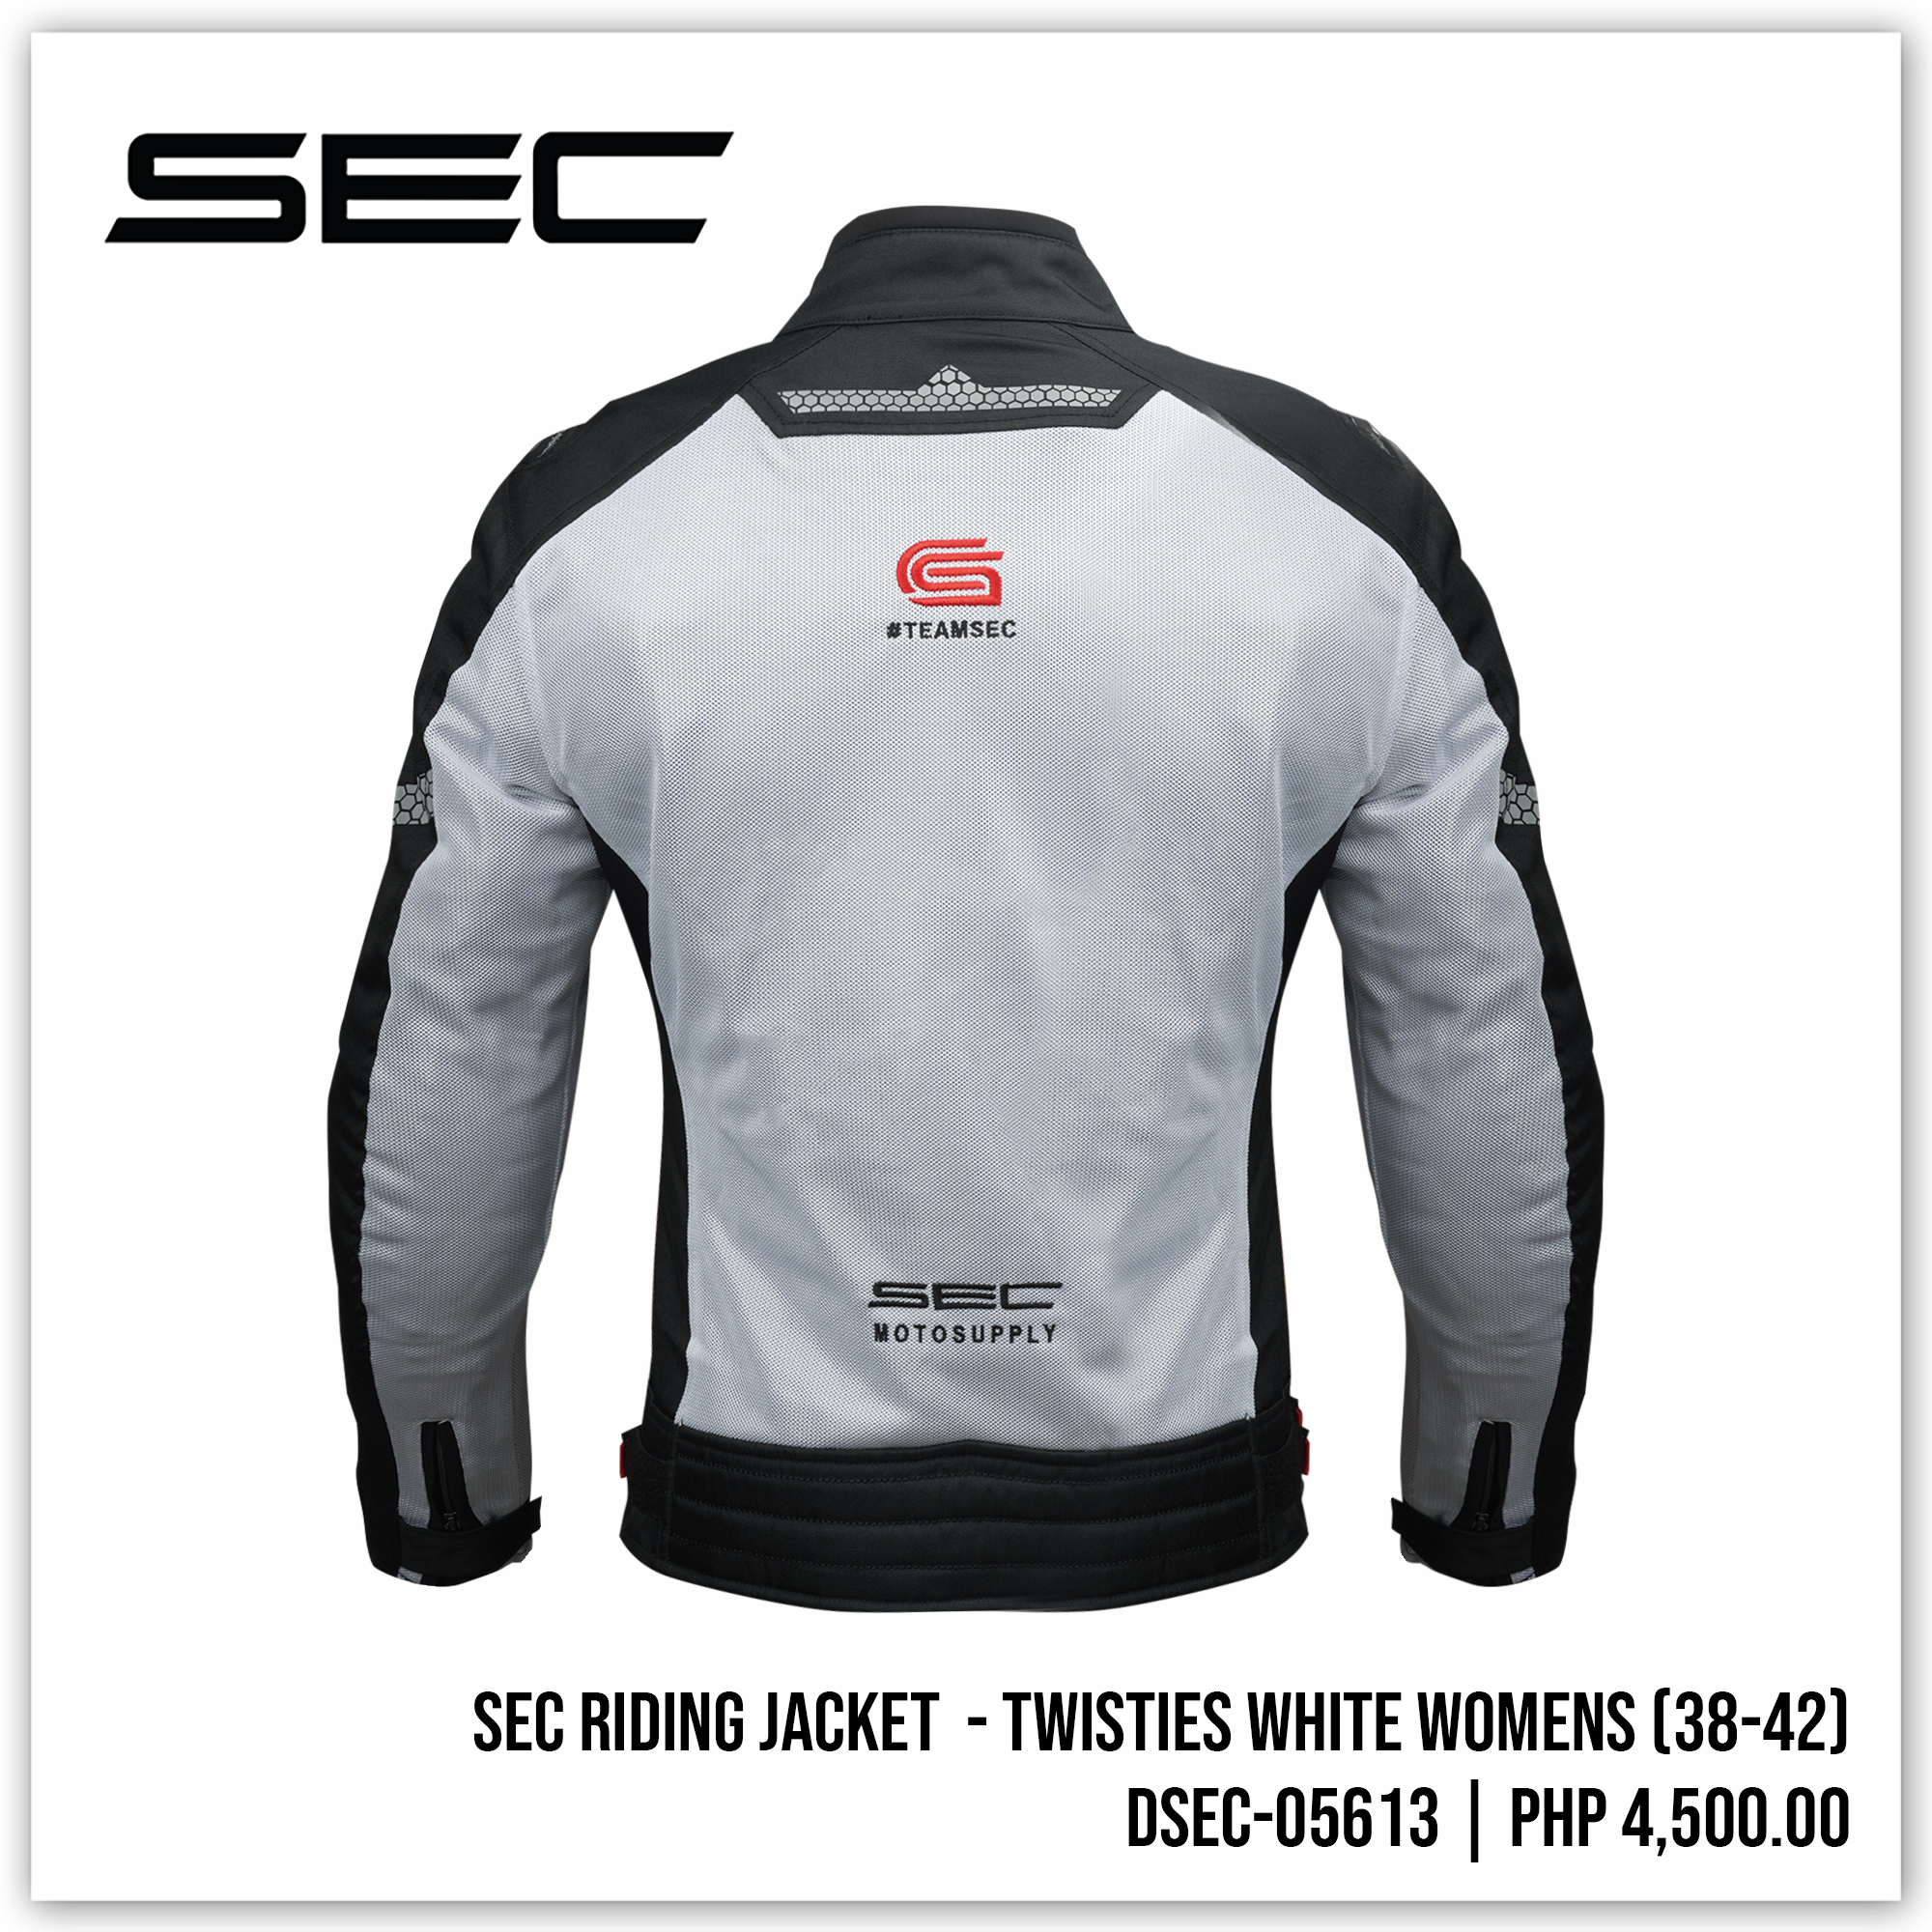 SEC Riding Jacket - Twisties White Womens